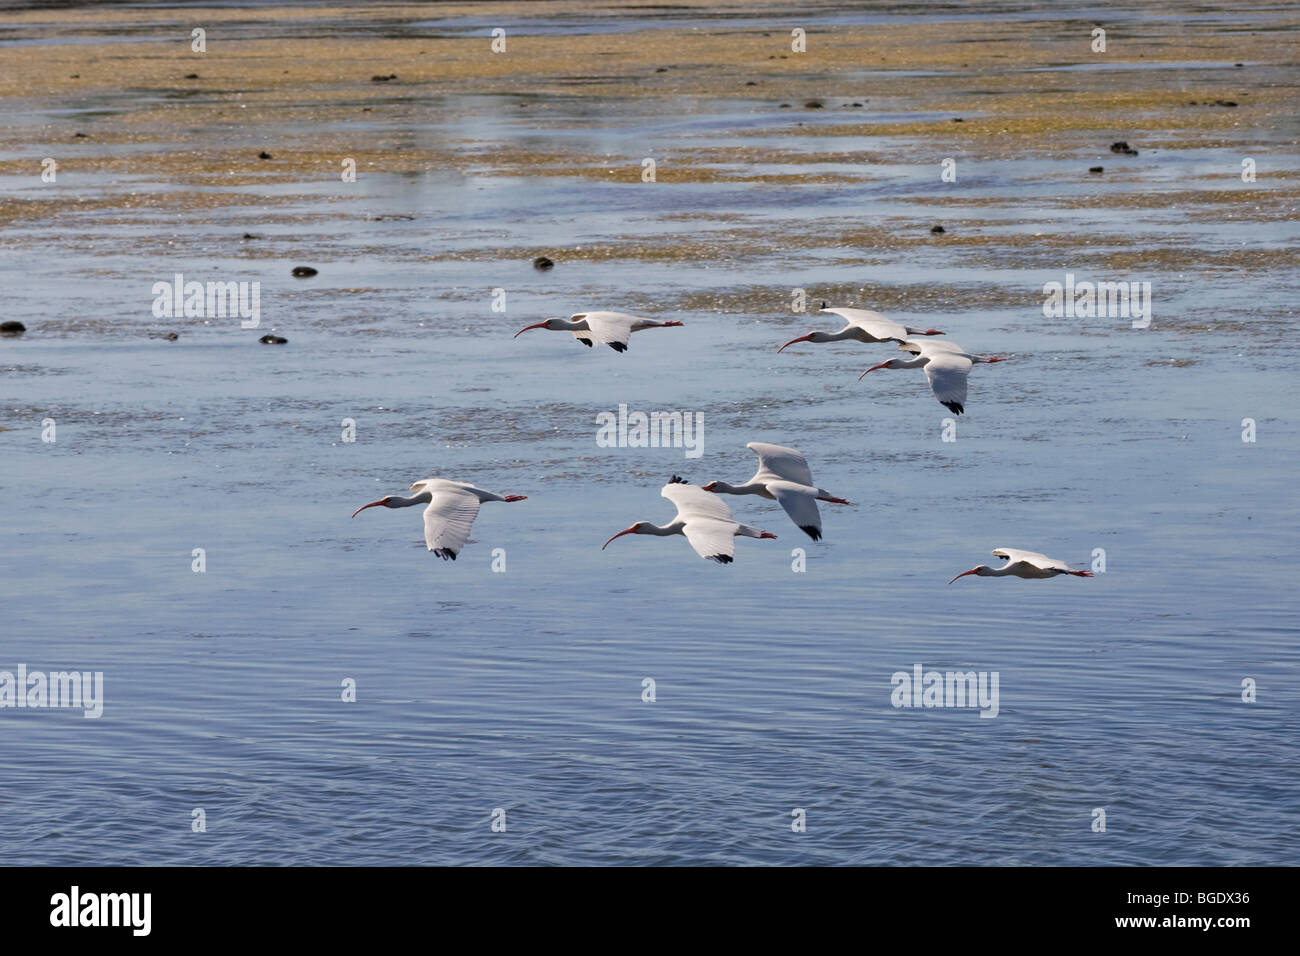 White Ibis flying in flock in J N Ding Darling National Wildlife Preserve on Sanibel Island Florida Stock Photo